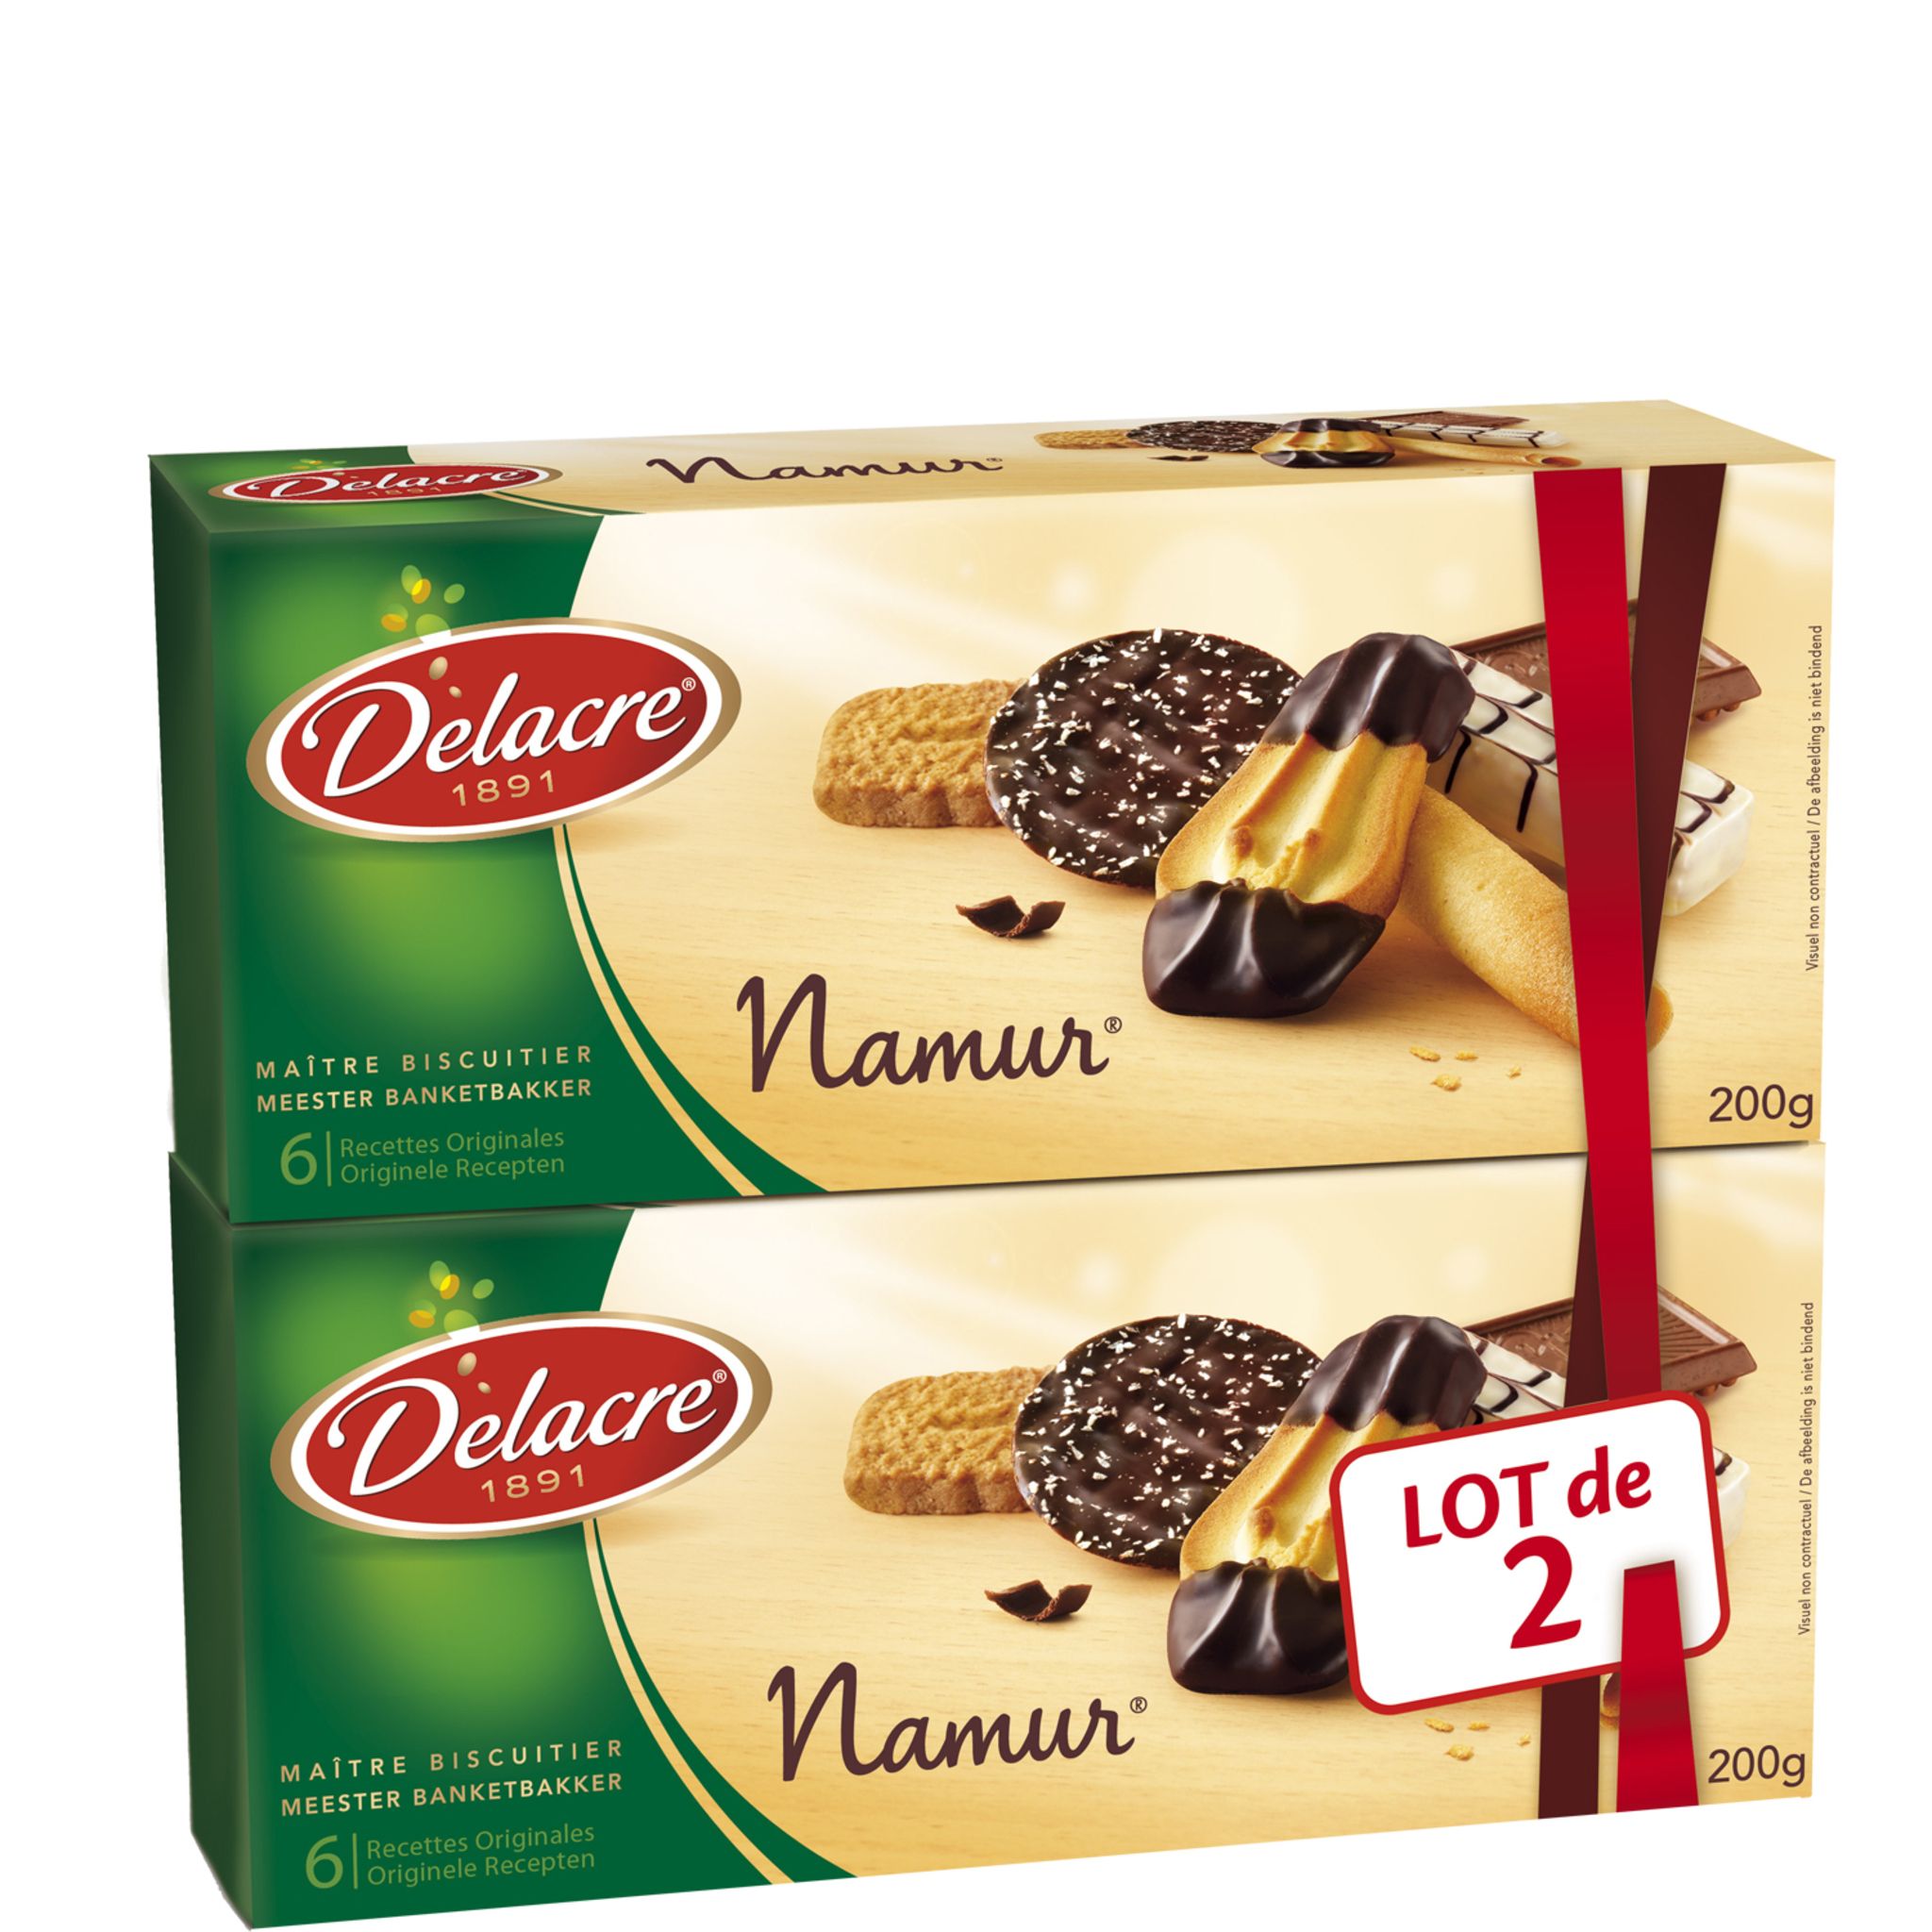 Delacre Namur assortiment biscuit 200 gr CHOCKIES